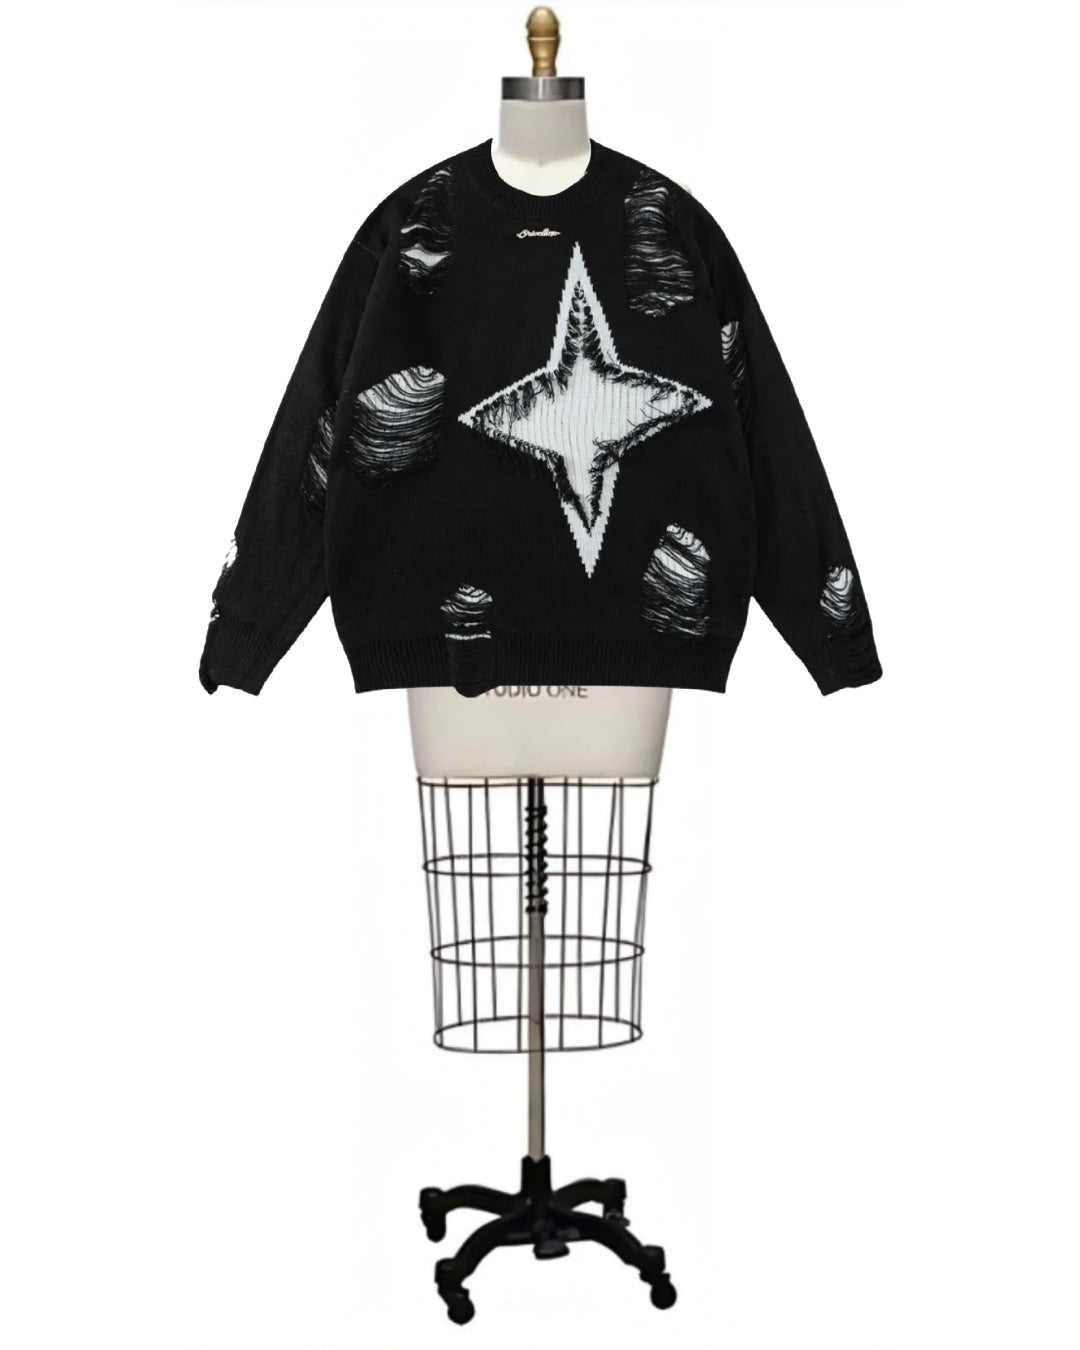 Cosmos- the Big Star Design Sweater Black or Grey